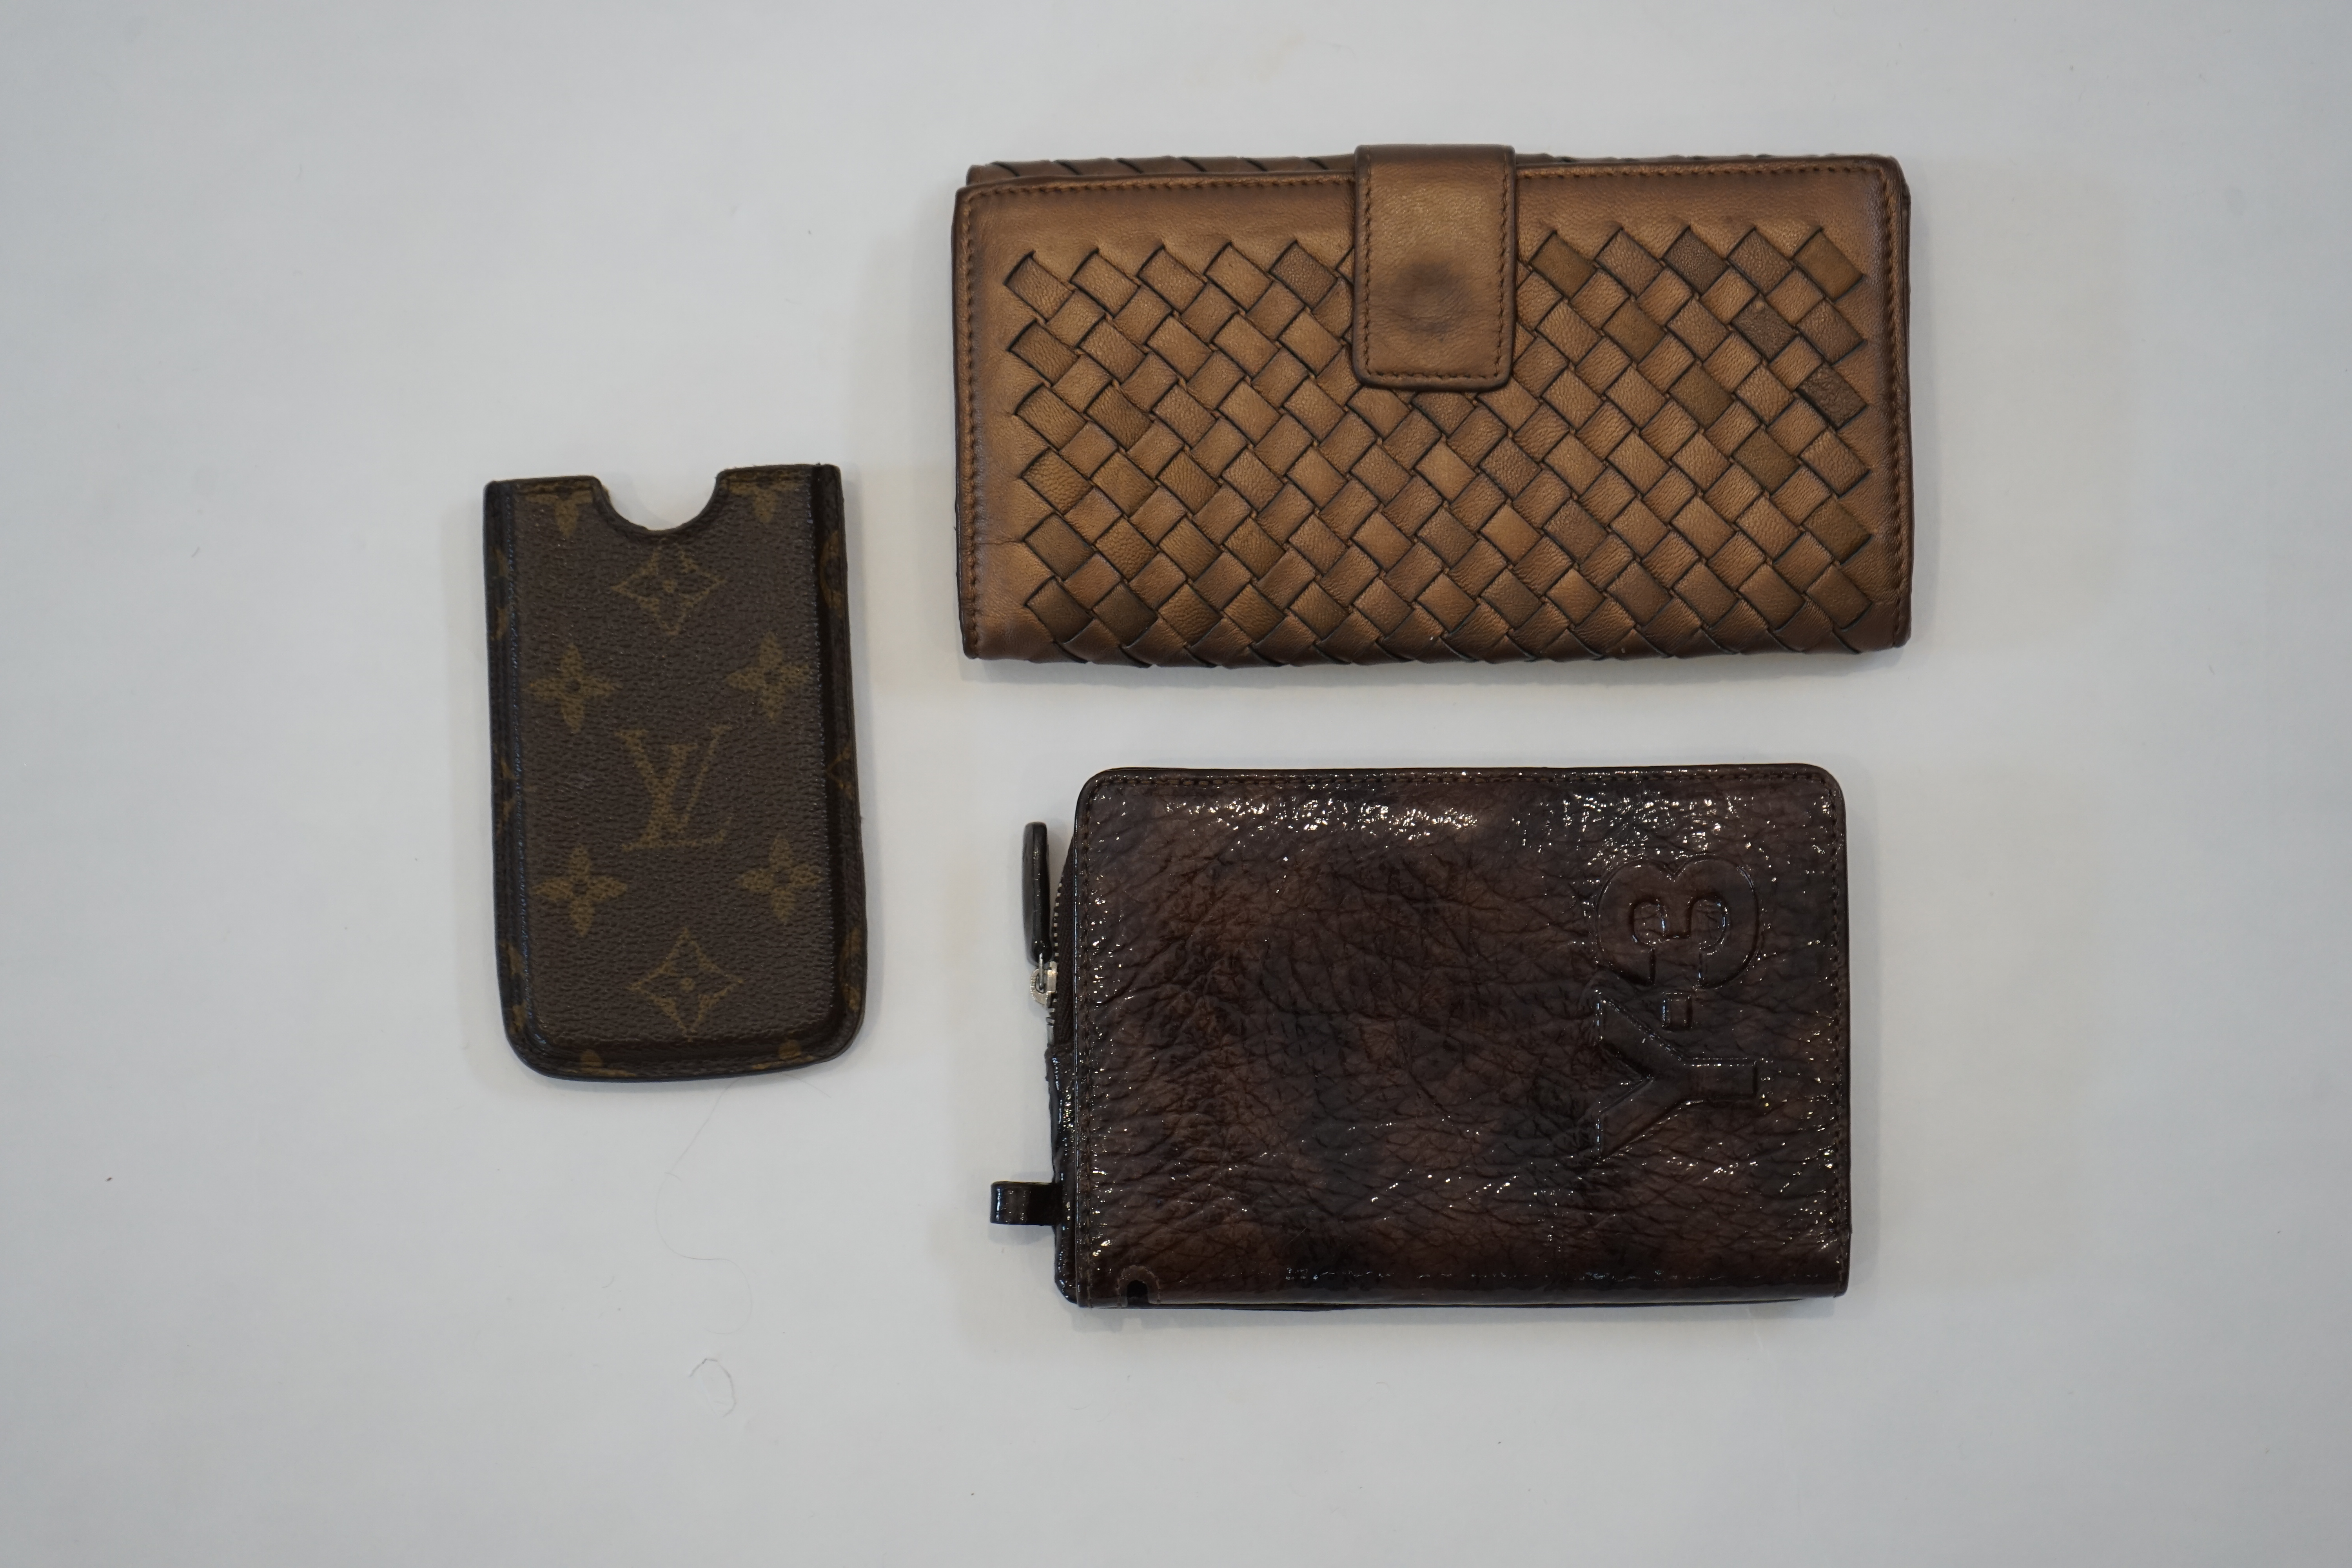 A Bottega Veneta purse, a Y-3 purse/wallet and a Louis Vuitton phone case